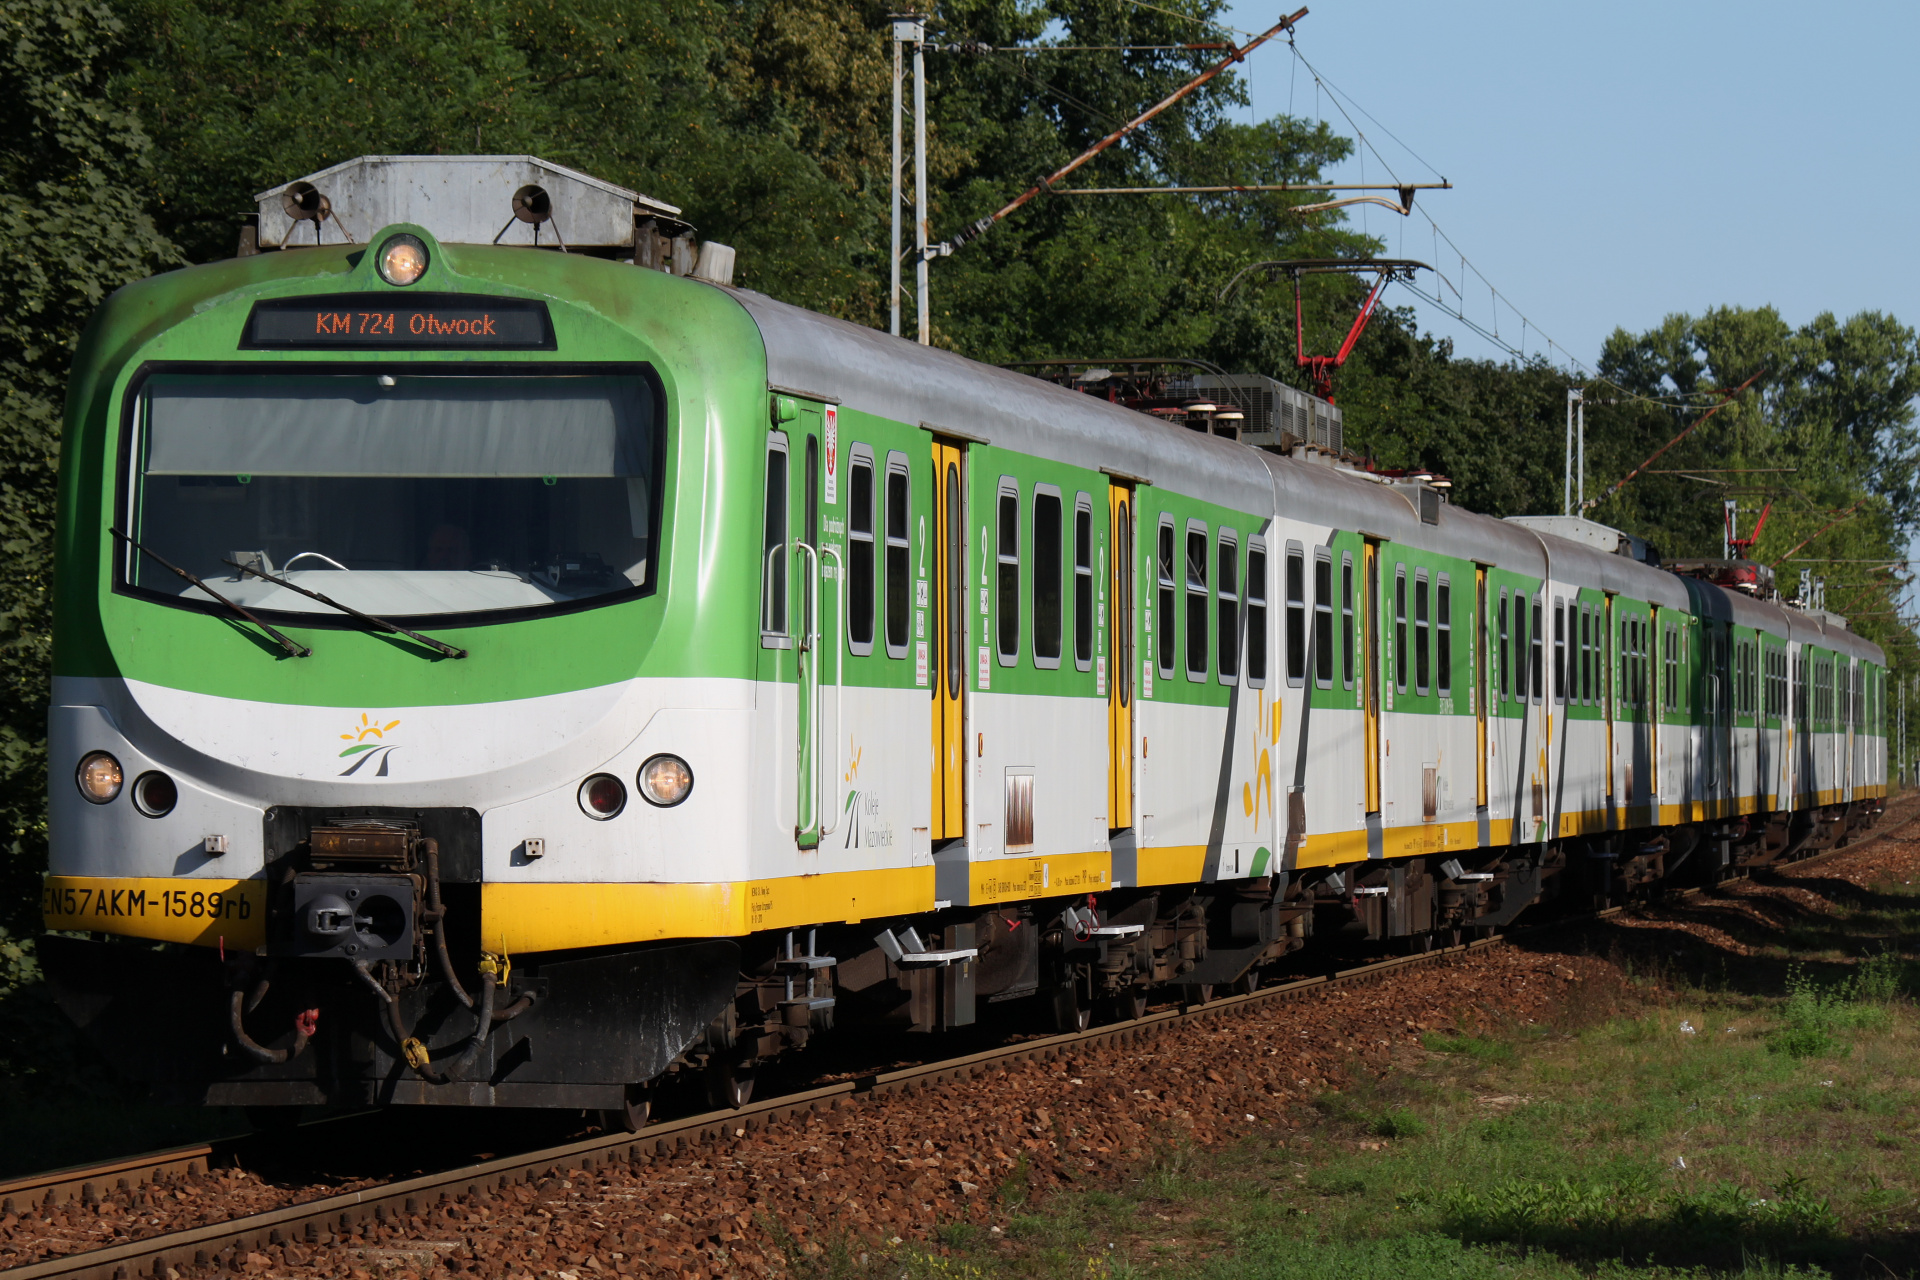 EN57AKM-1589 (Vehicles » Trains and Locomotives » Pafawag 5B/6B EN57 and revisions)